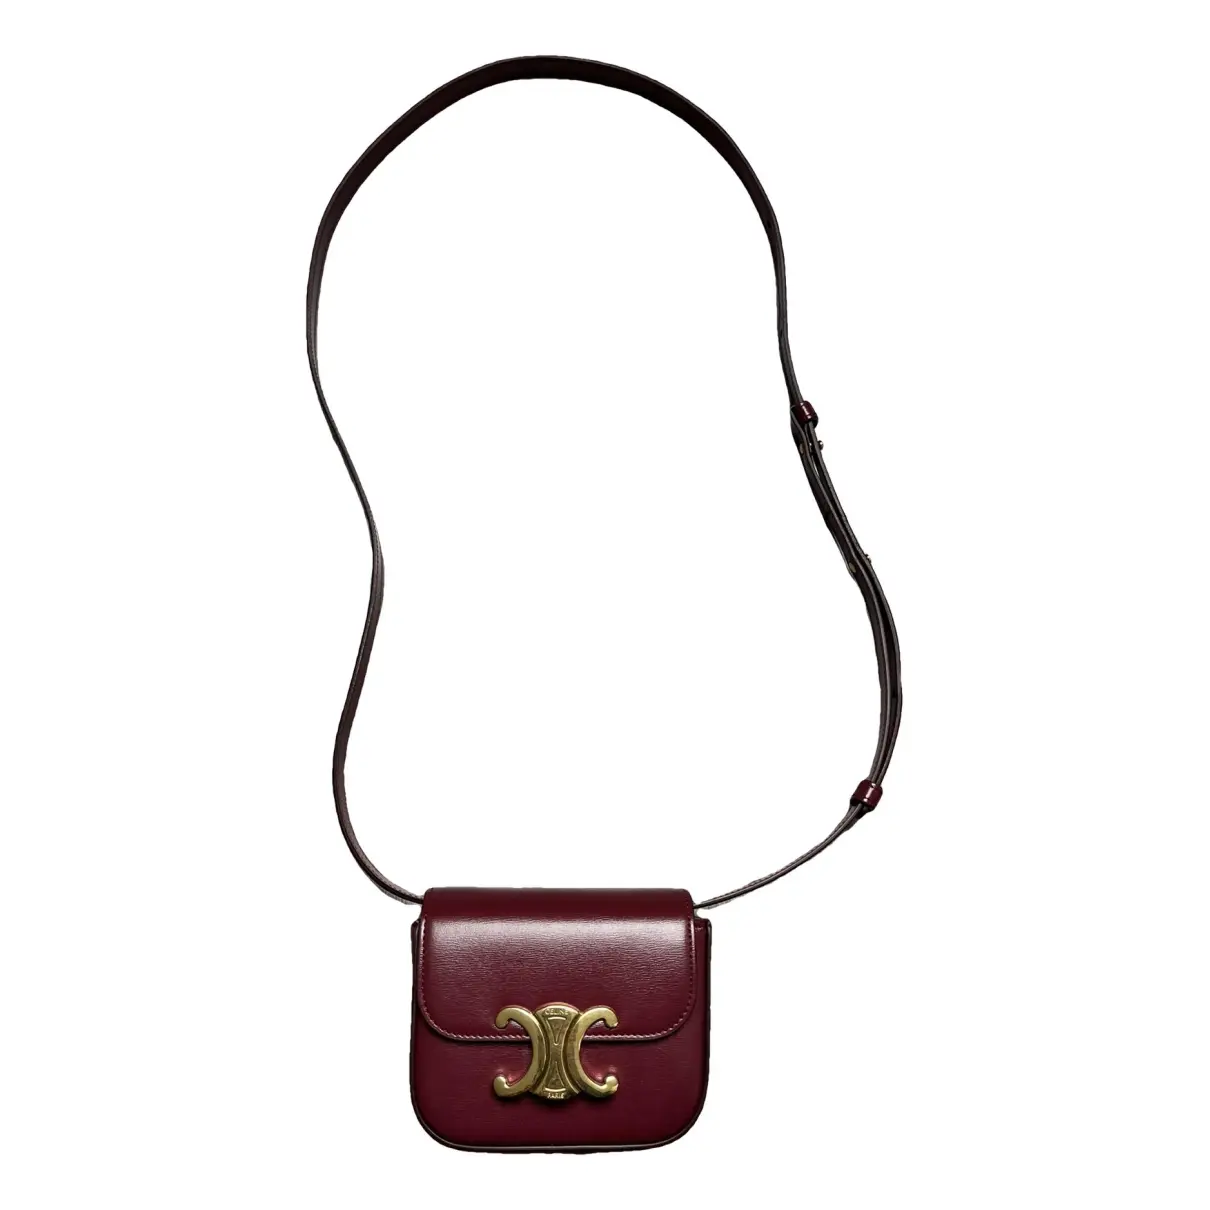 Triomphe leather handbag